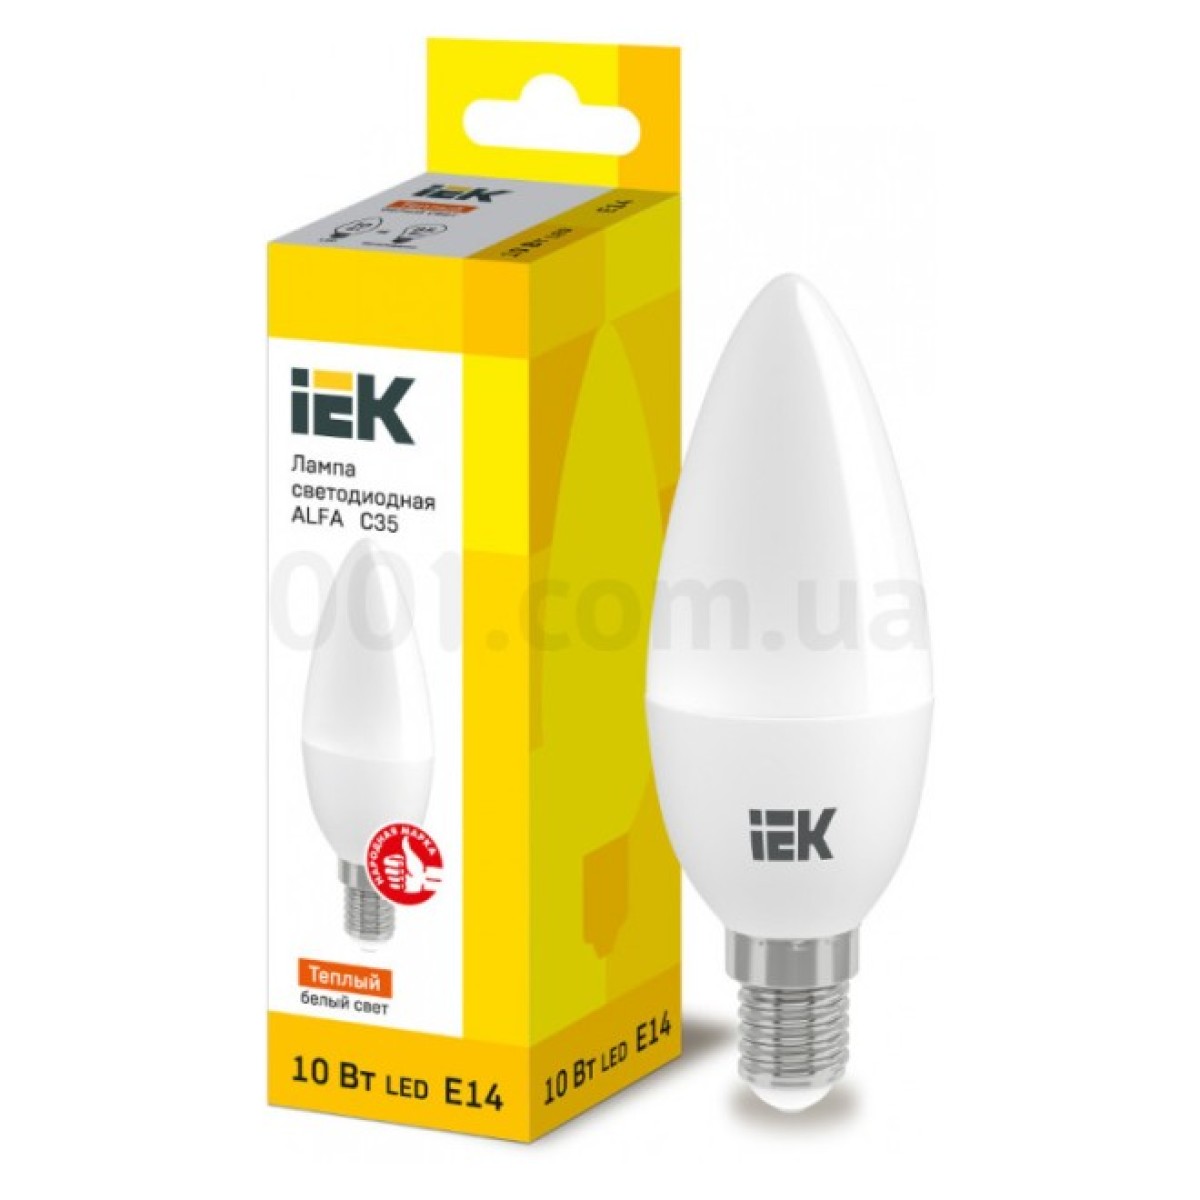 Светодиодная лампа LED ALFA C35 (свеча) 10 Вт 230В 3000К E14, IEK 256_256.jpg